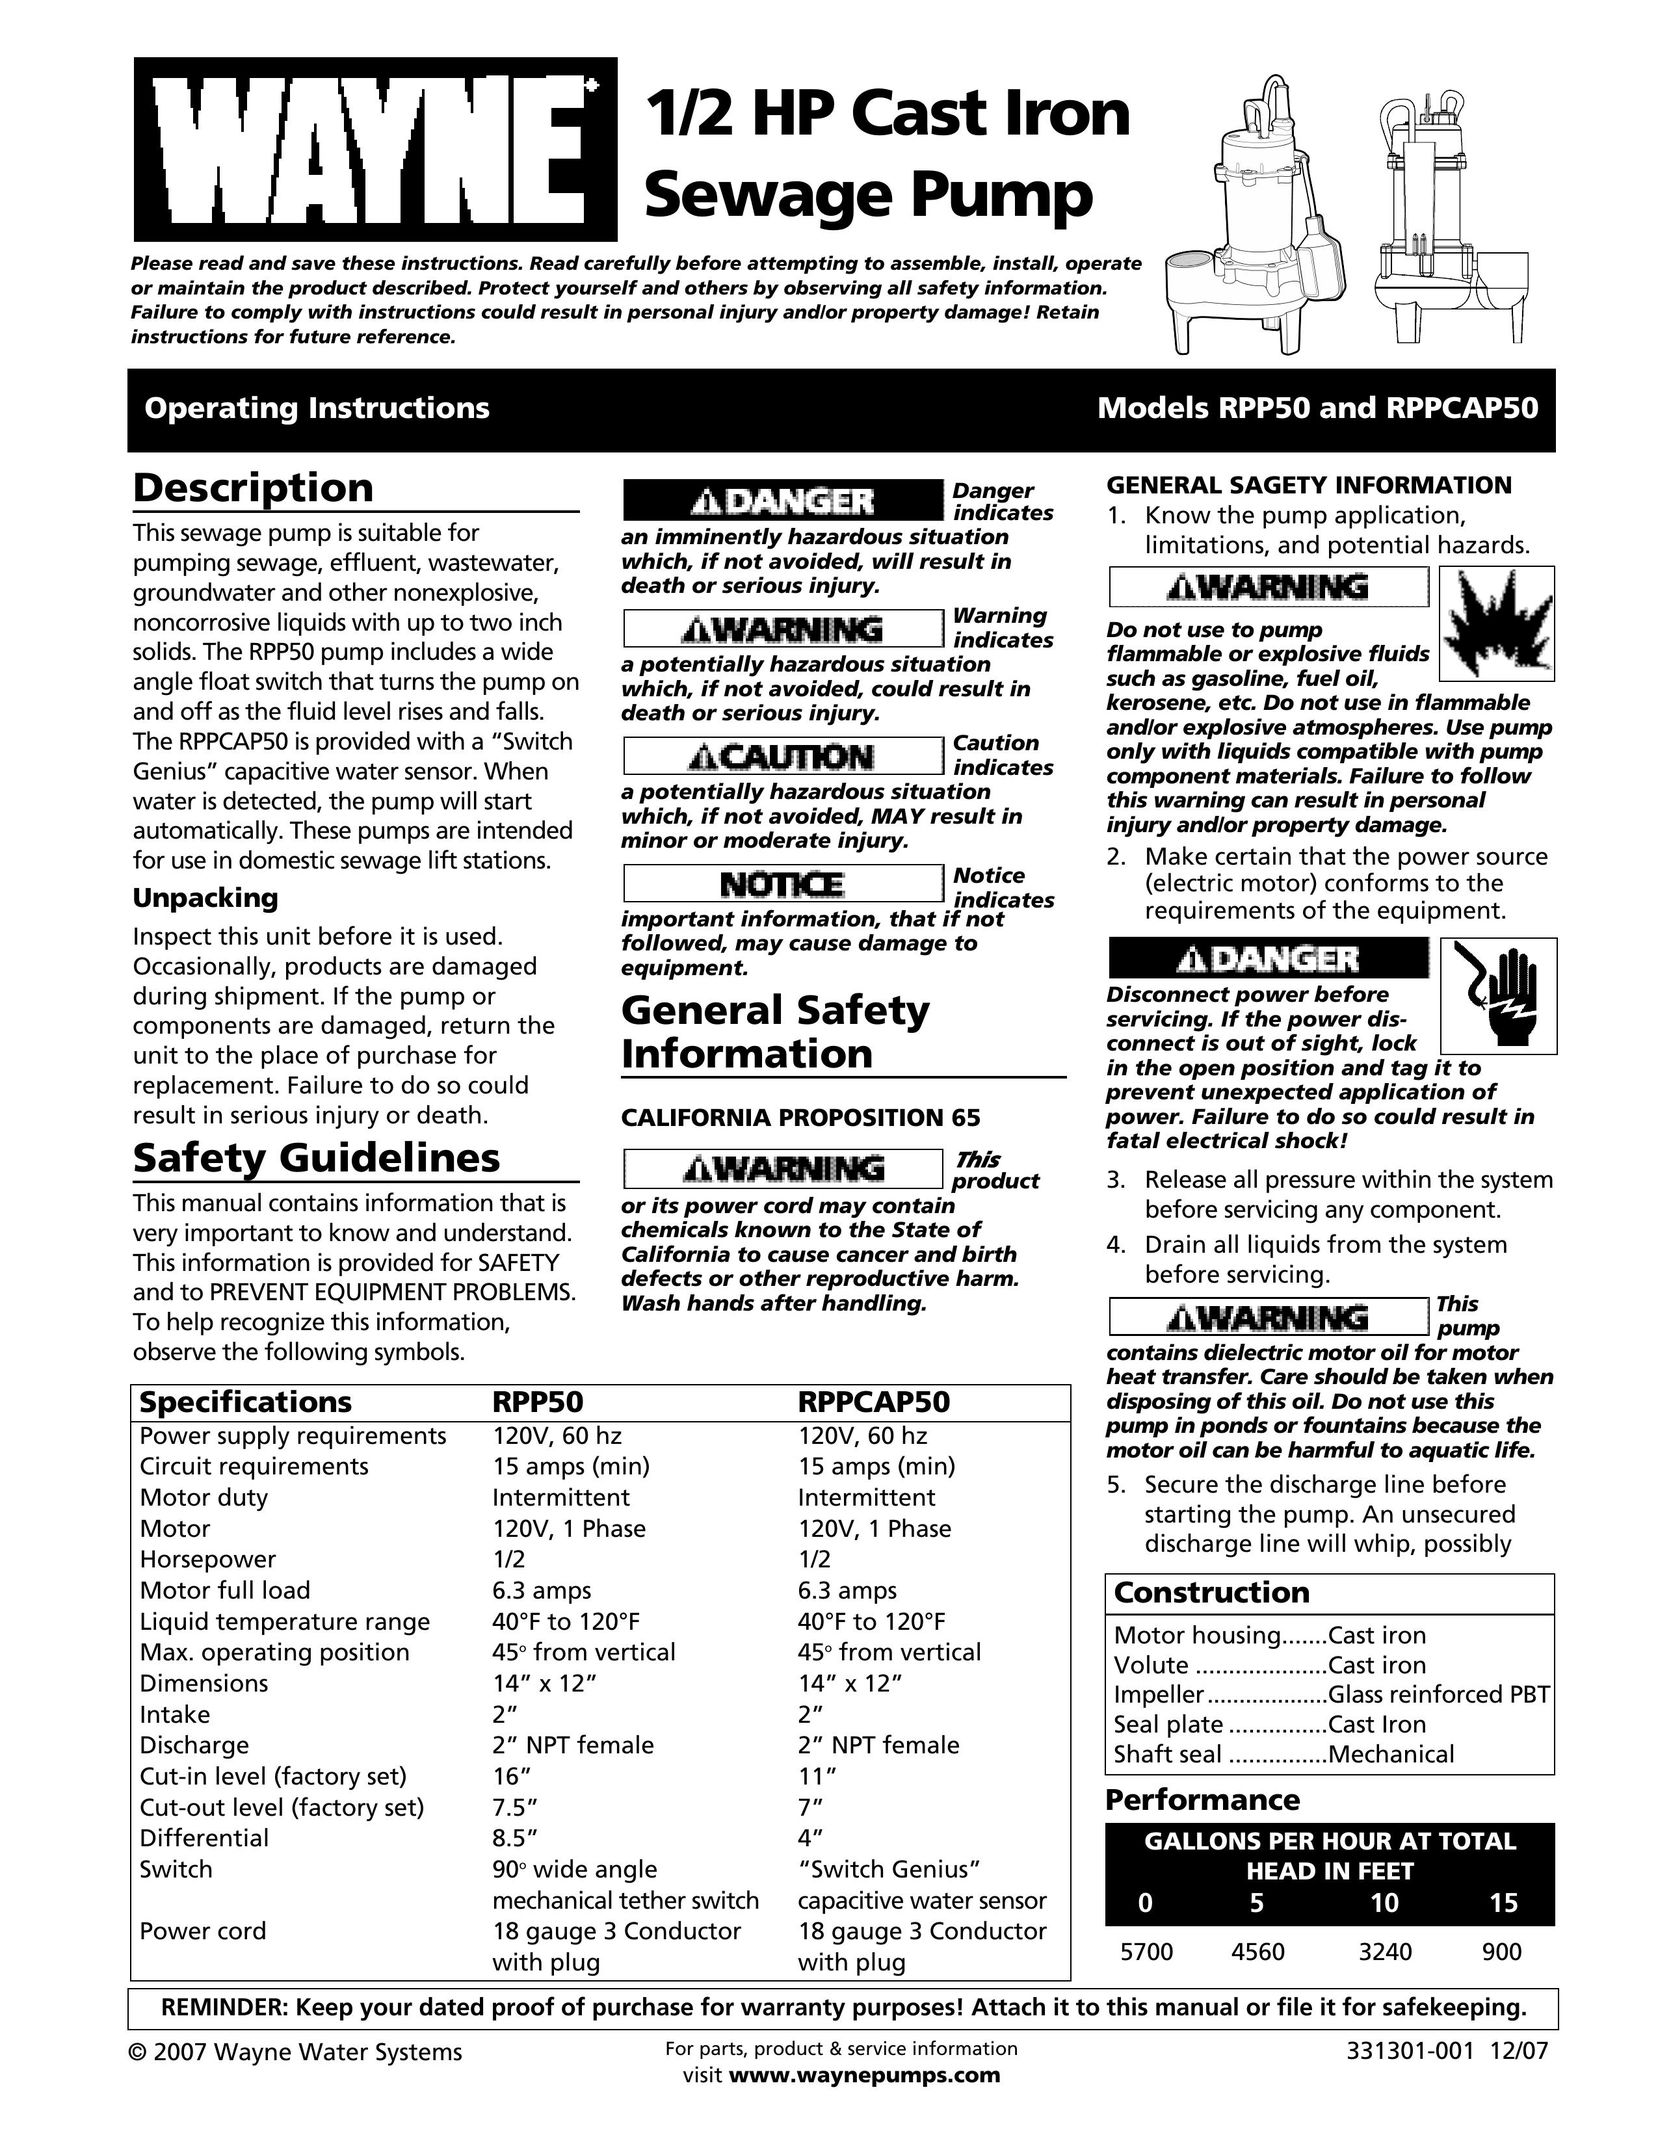 Wayne 331301-001 Septic System User Manual